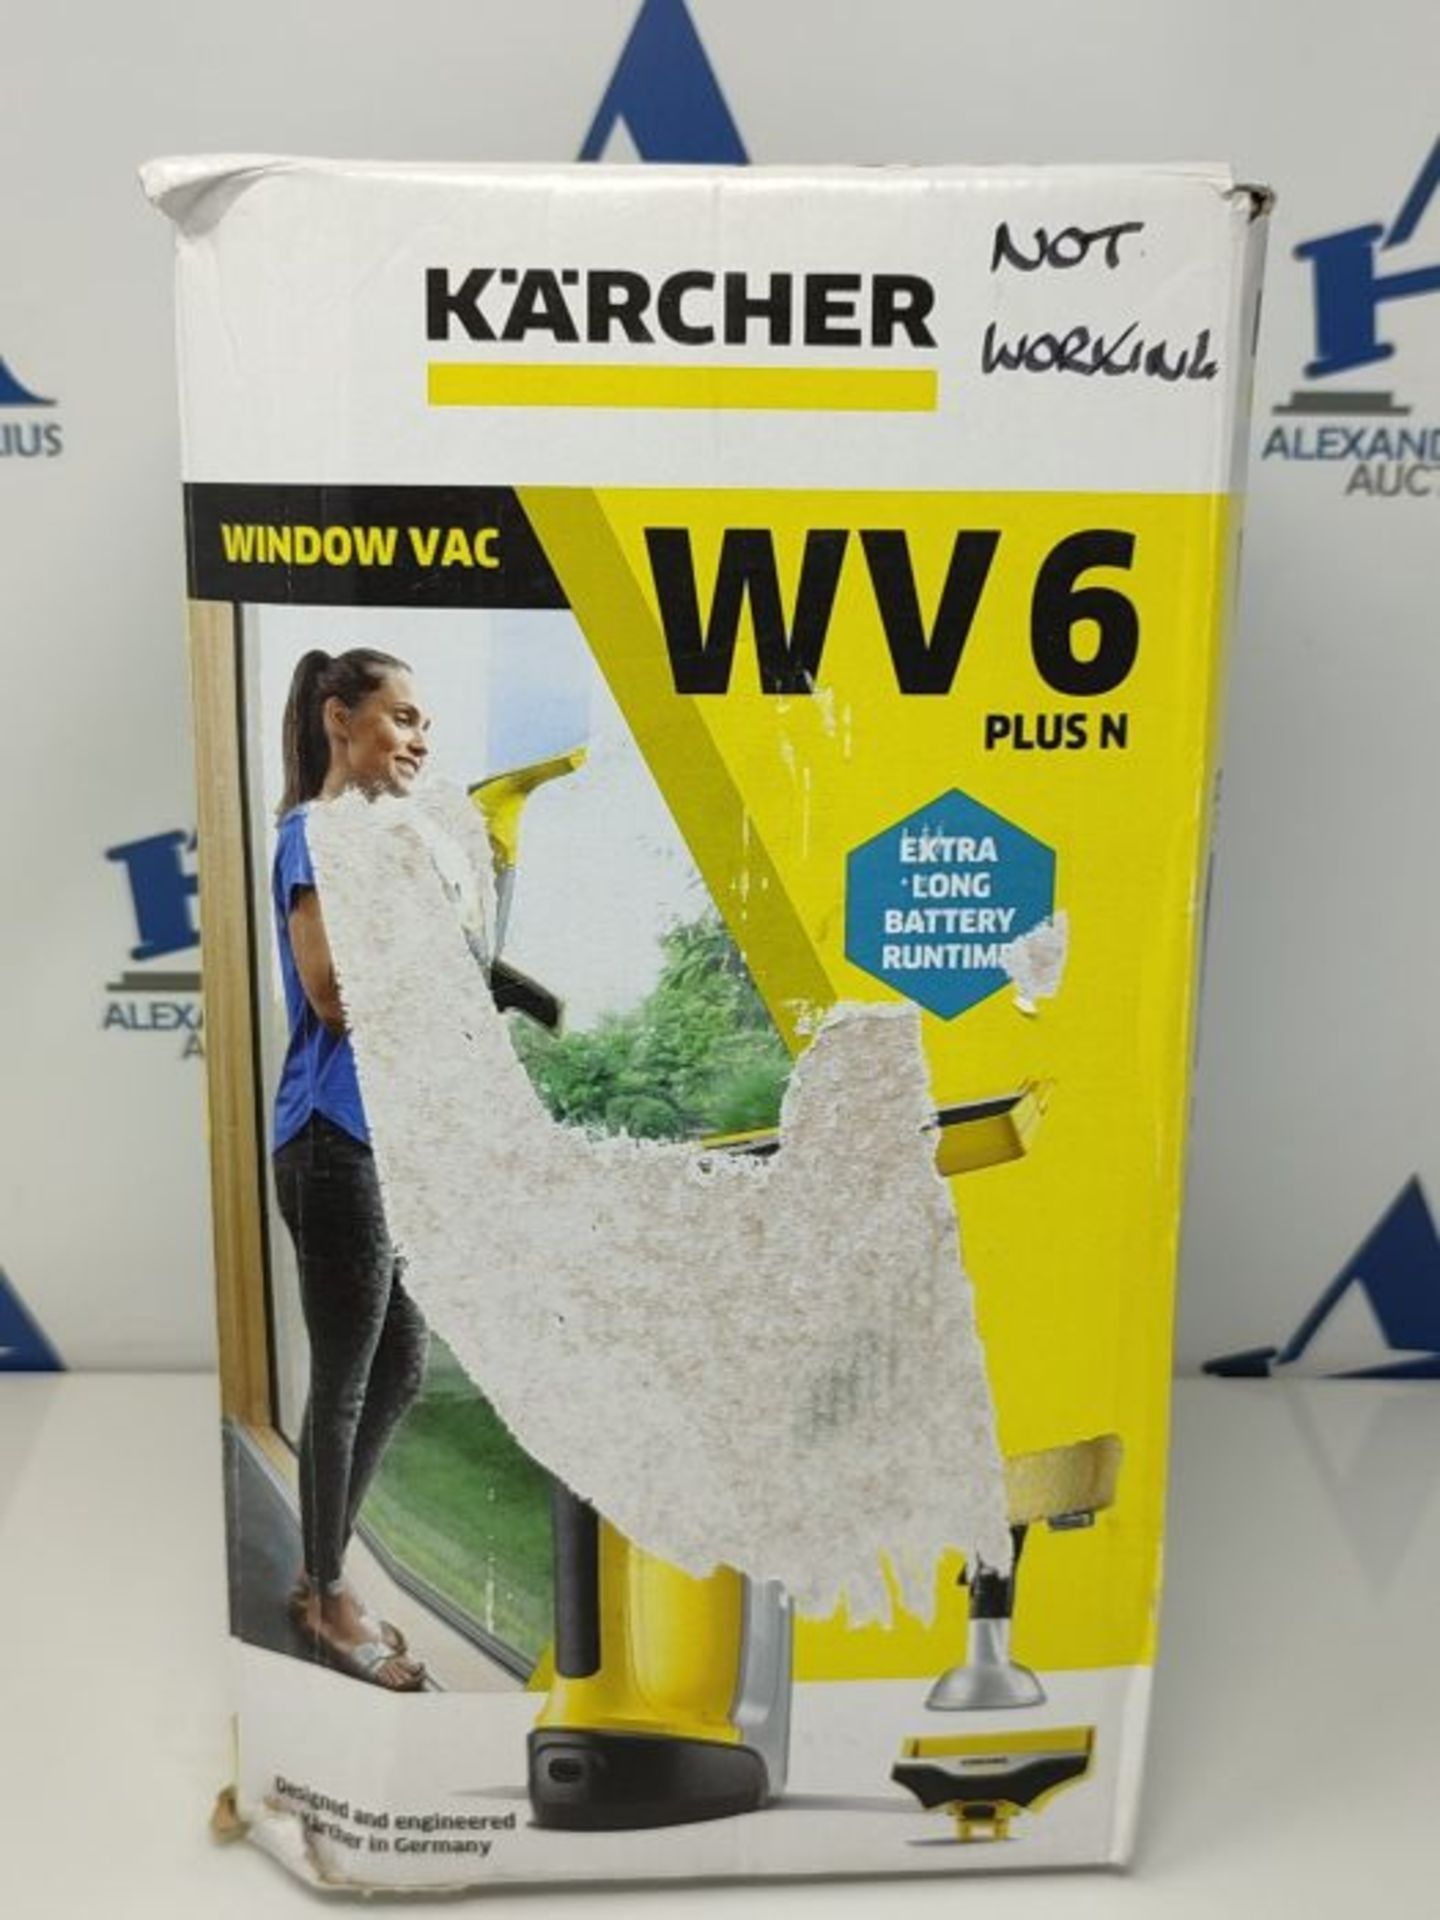 RRP £109.00 Kärcher 16332220 WV 6 Plus N Window Vac, 10 W, 240 V, Yellow/Black - Image 2 of 3